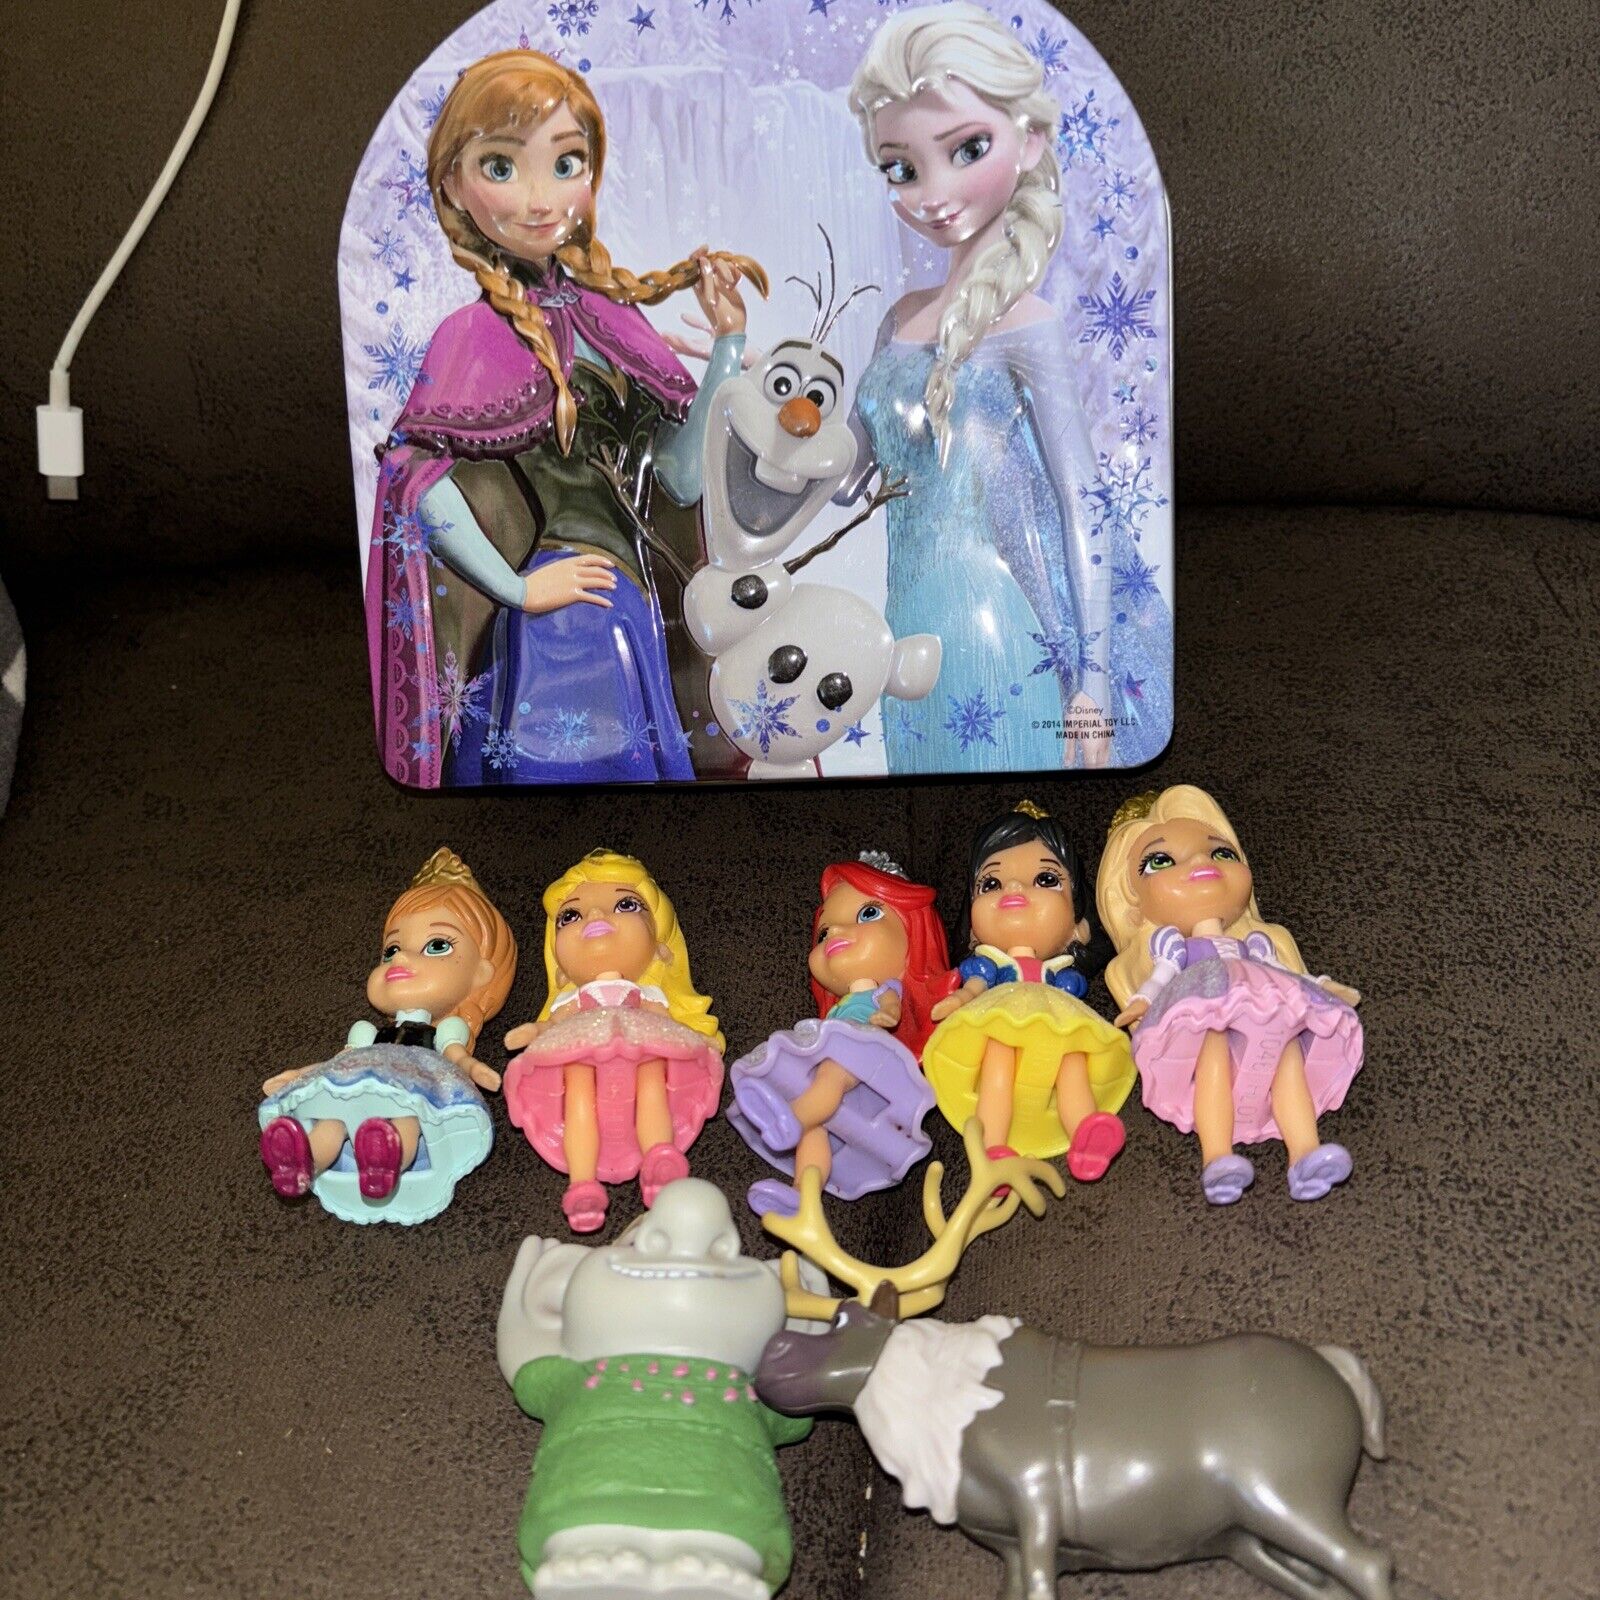 Frozen Tim Purse And Disney princesses figurines